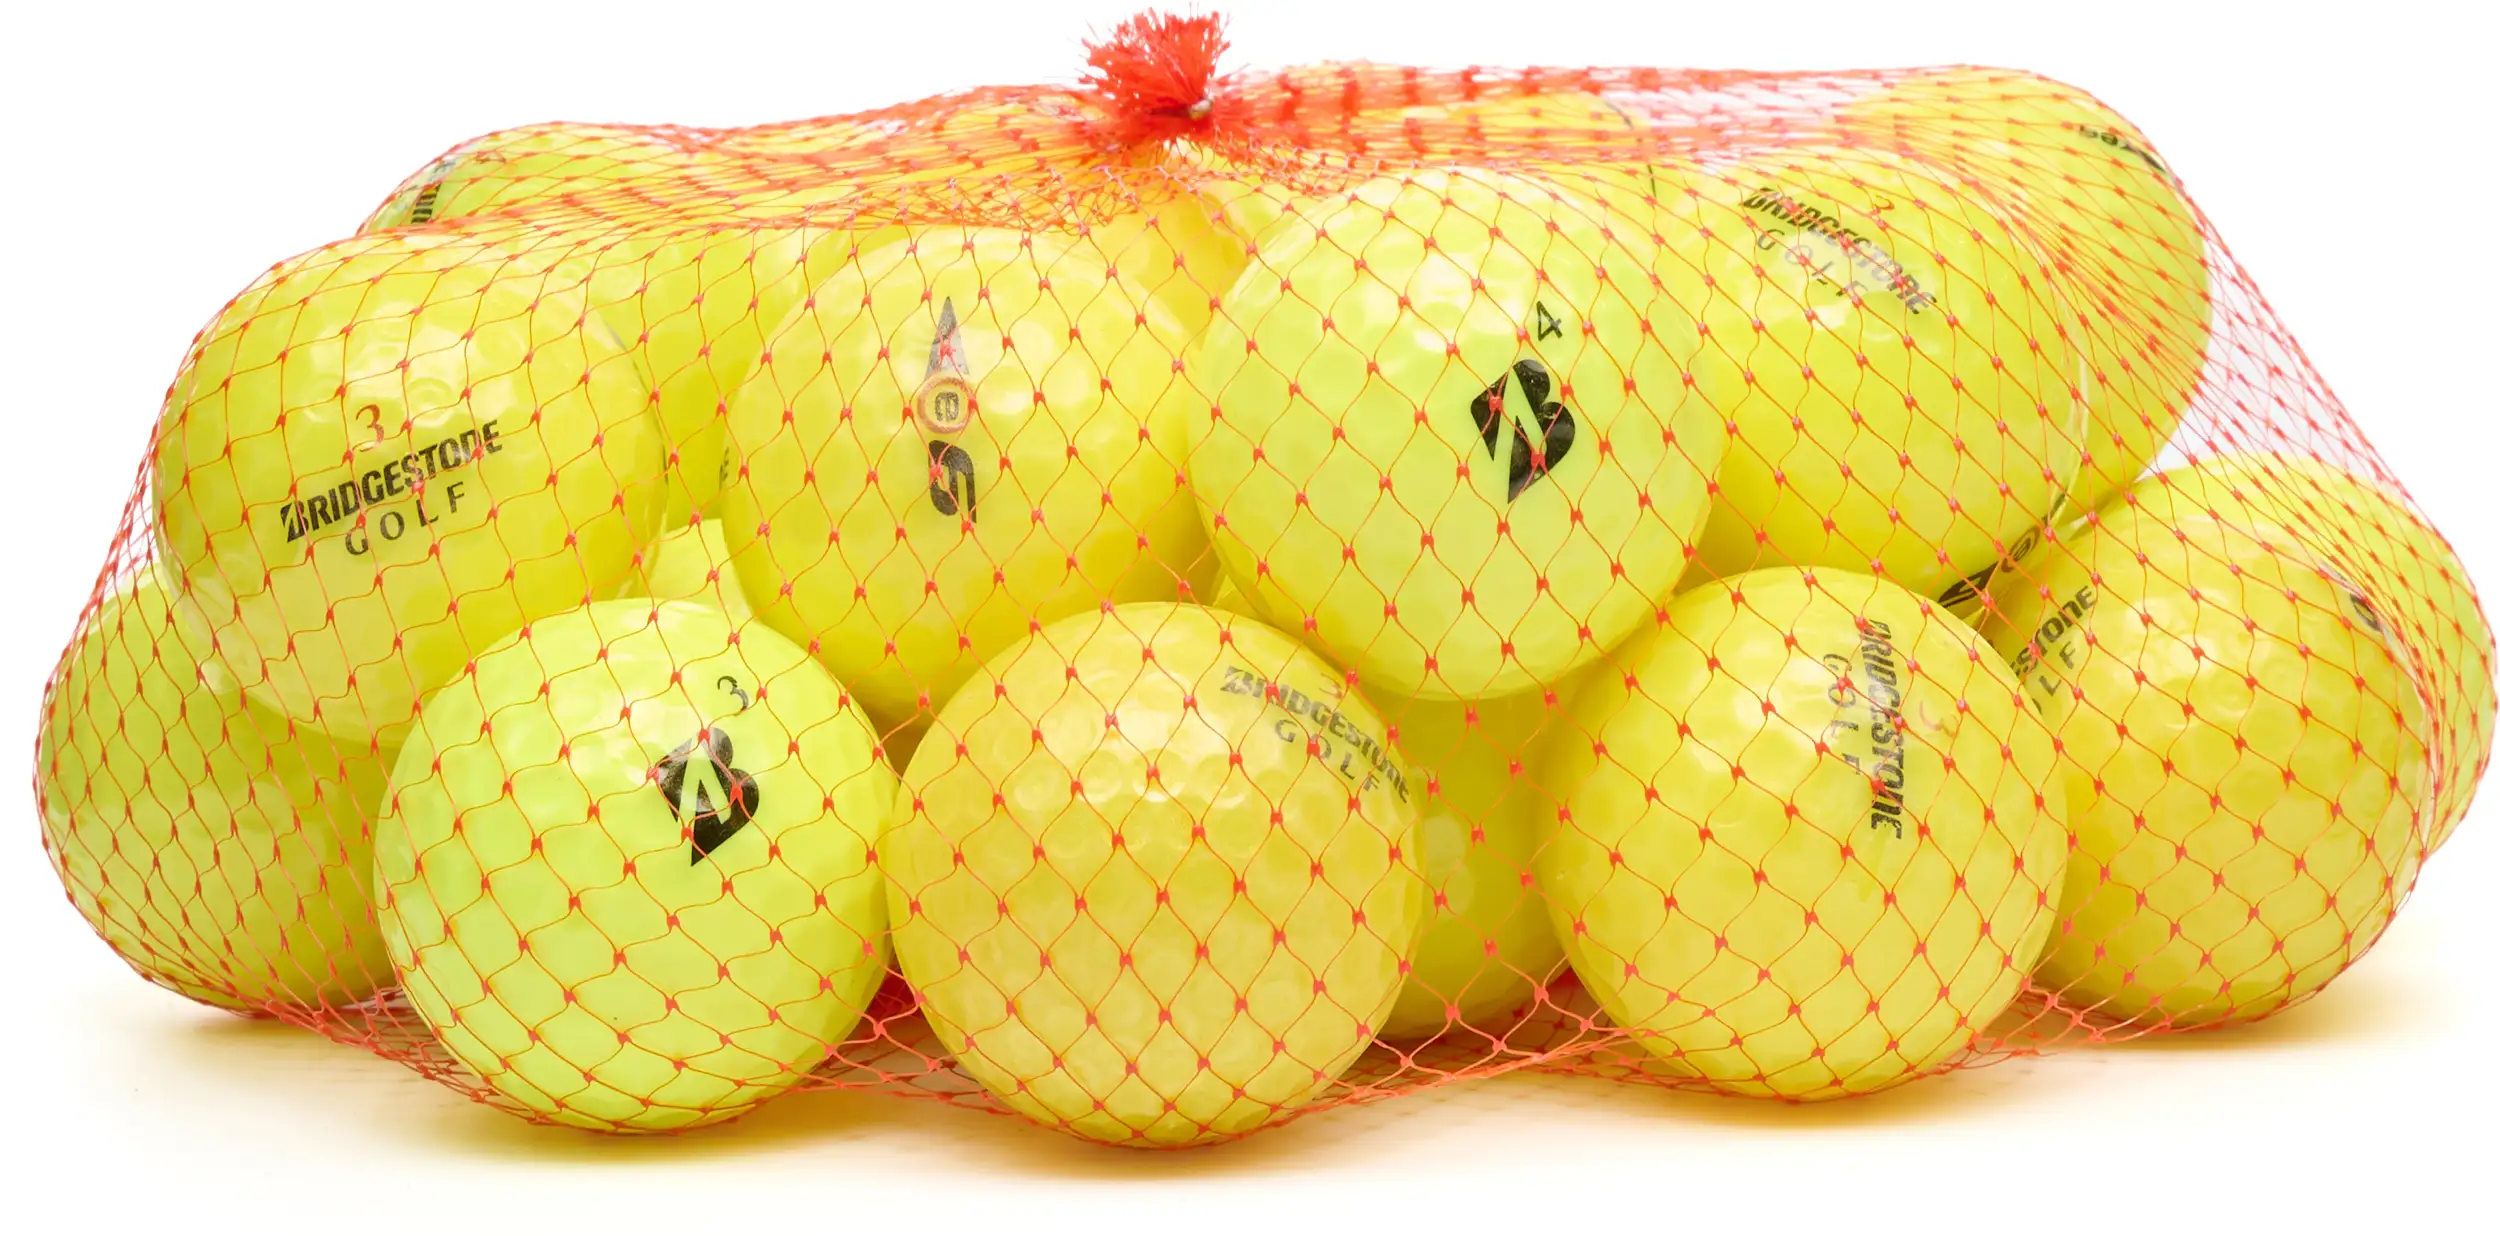 25 Bridgestone e6 Lakeballs, yellow